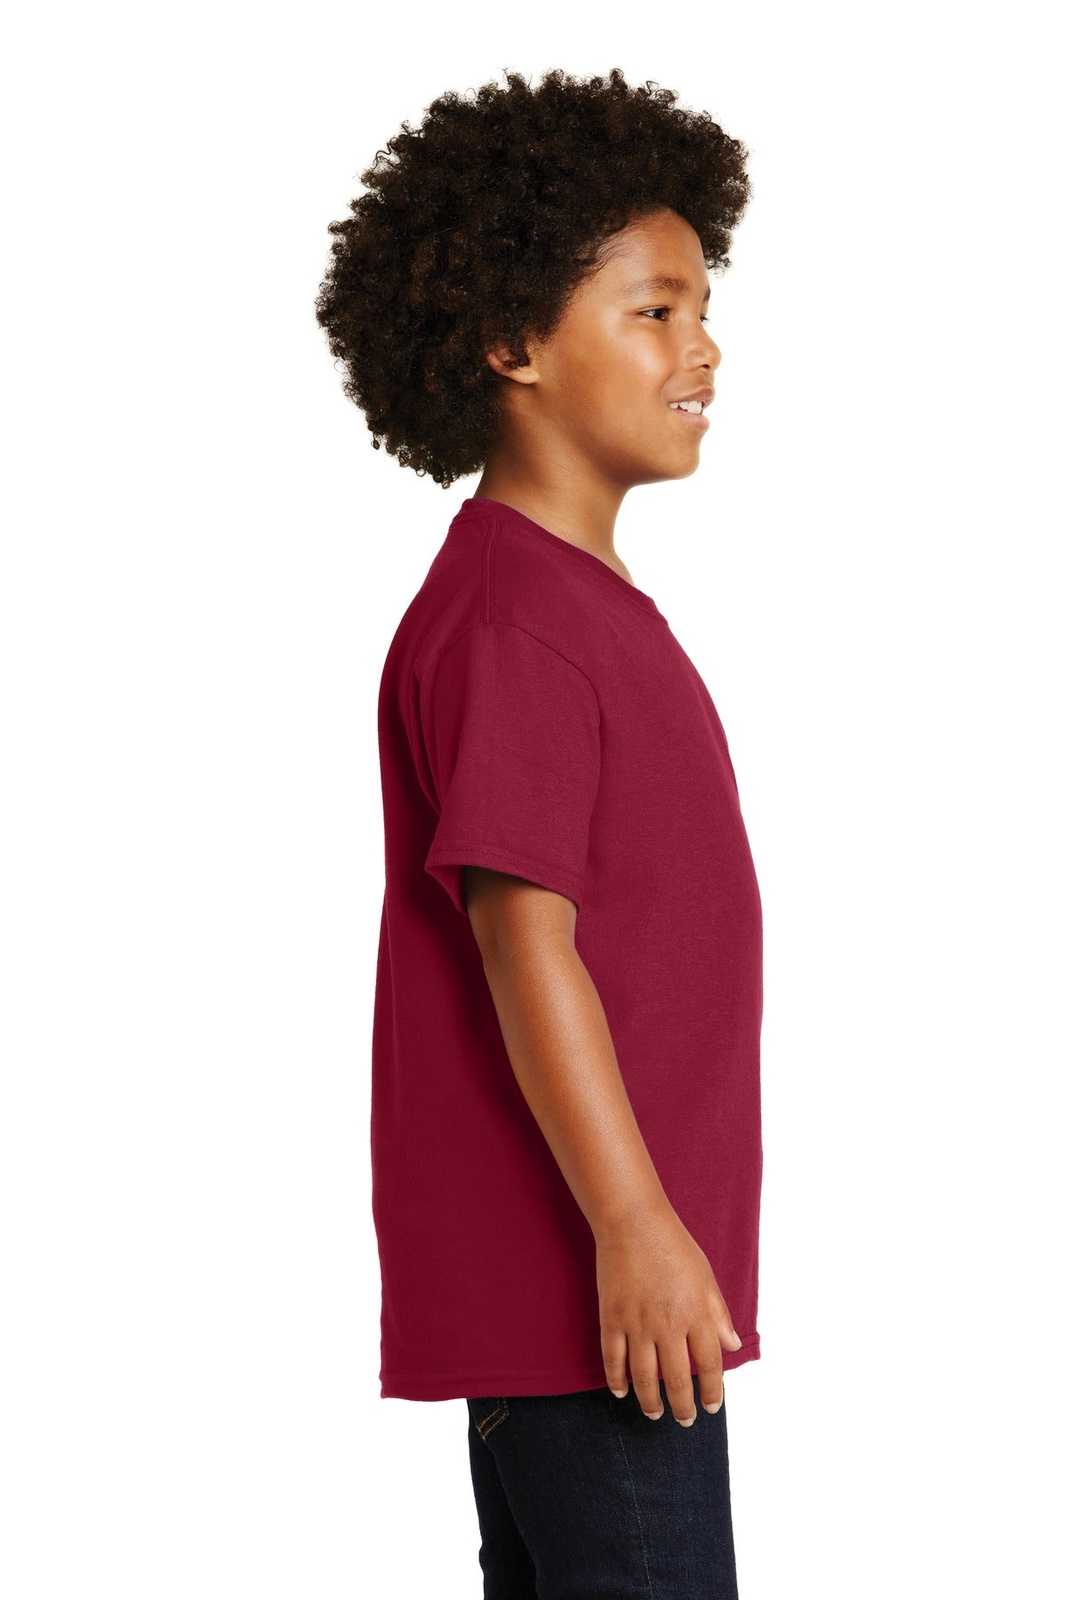 Gildan 2000B Youth Ultra Cotton 100% Cotton T-Shirt - Cardinal Red - HIT a Double